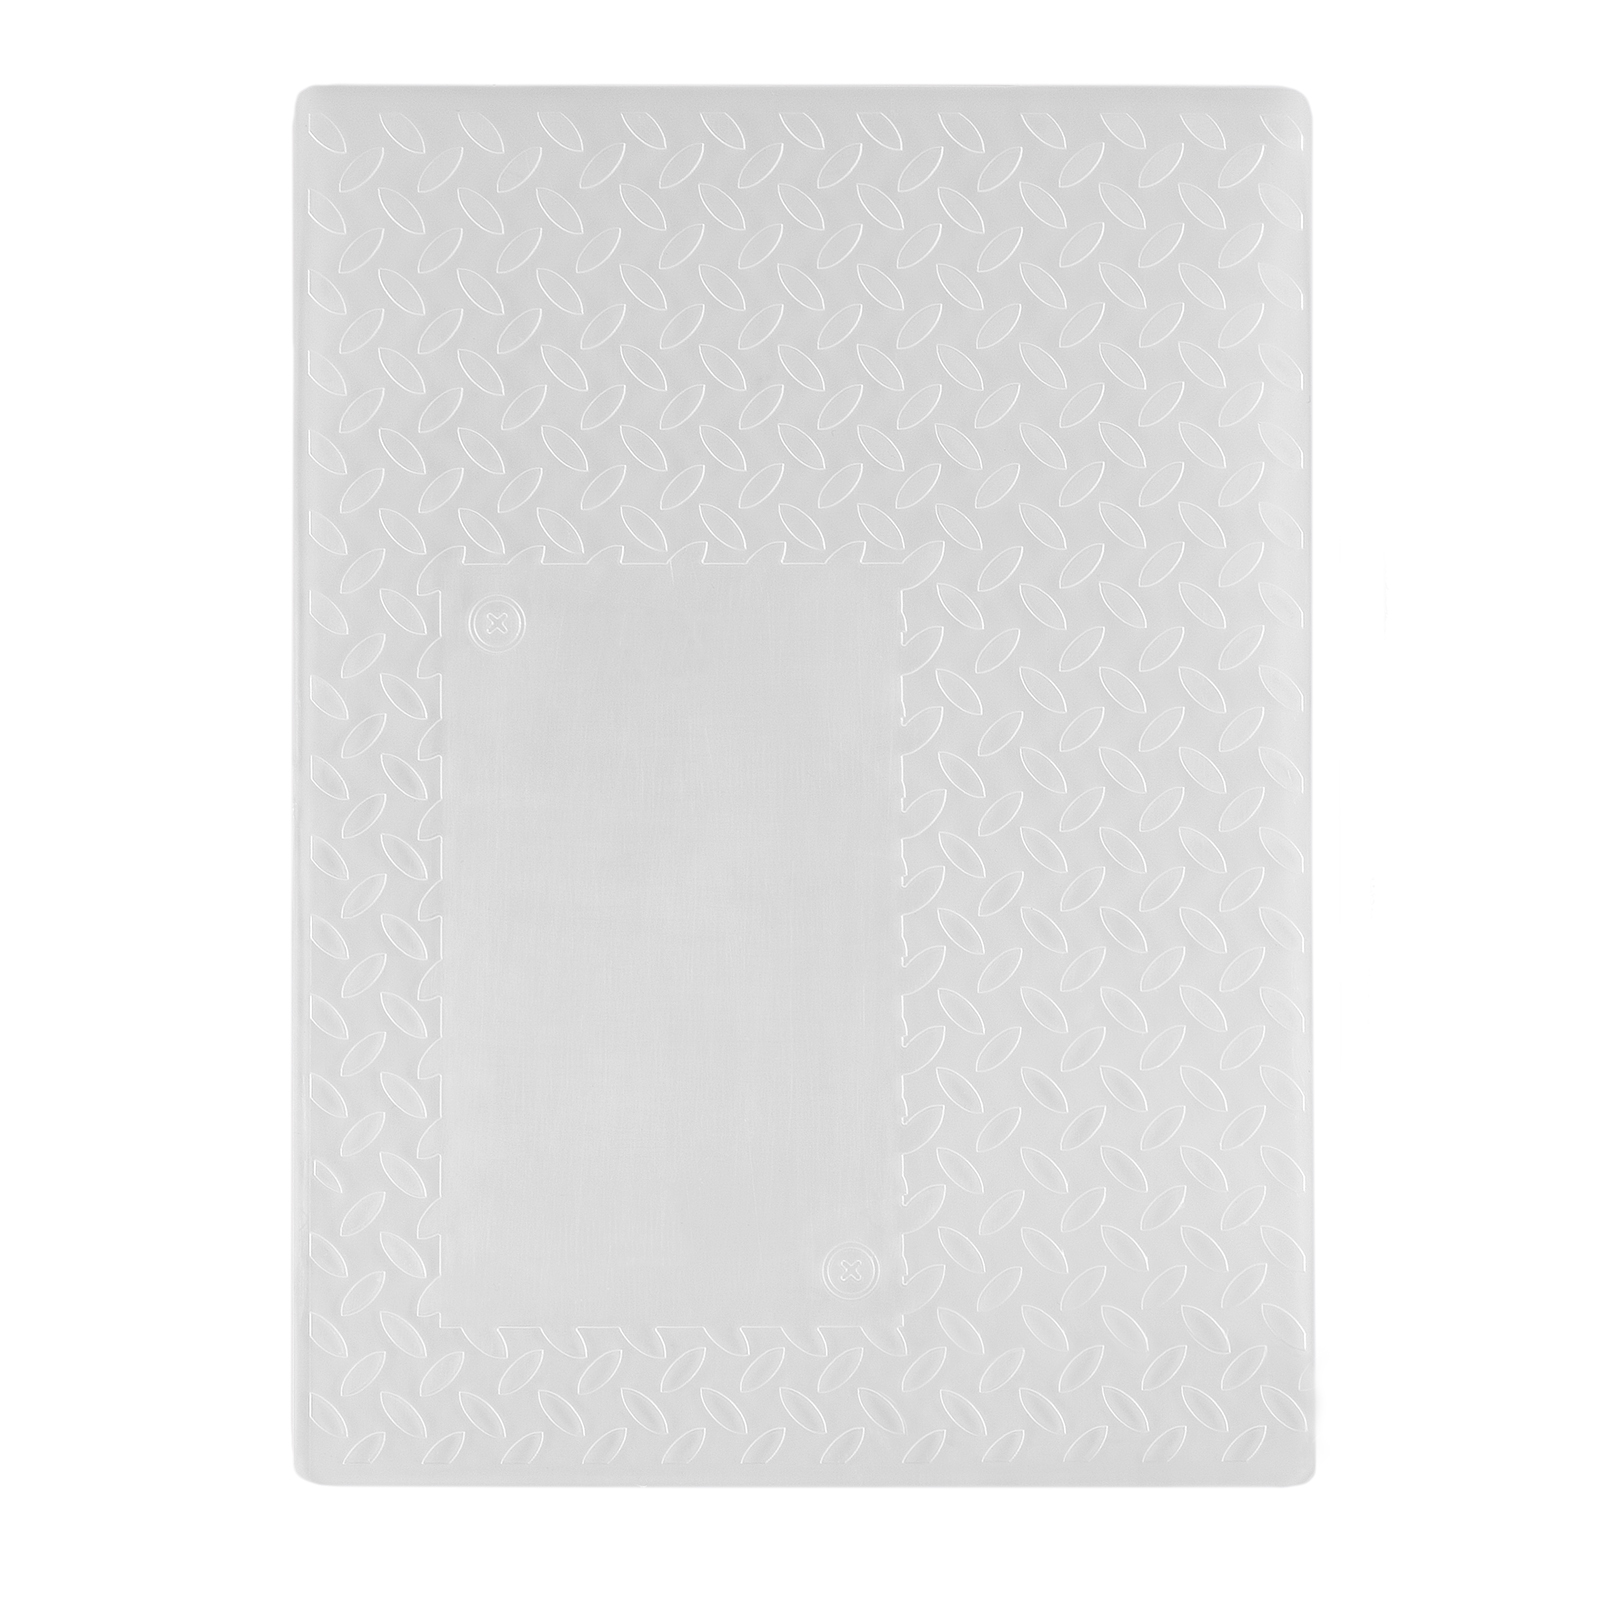 Vaessen Creative • Embossing Folder Iron Plate by Max